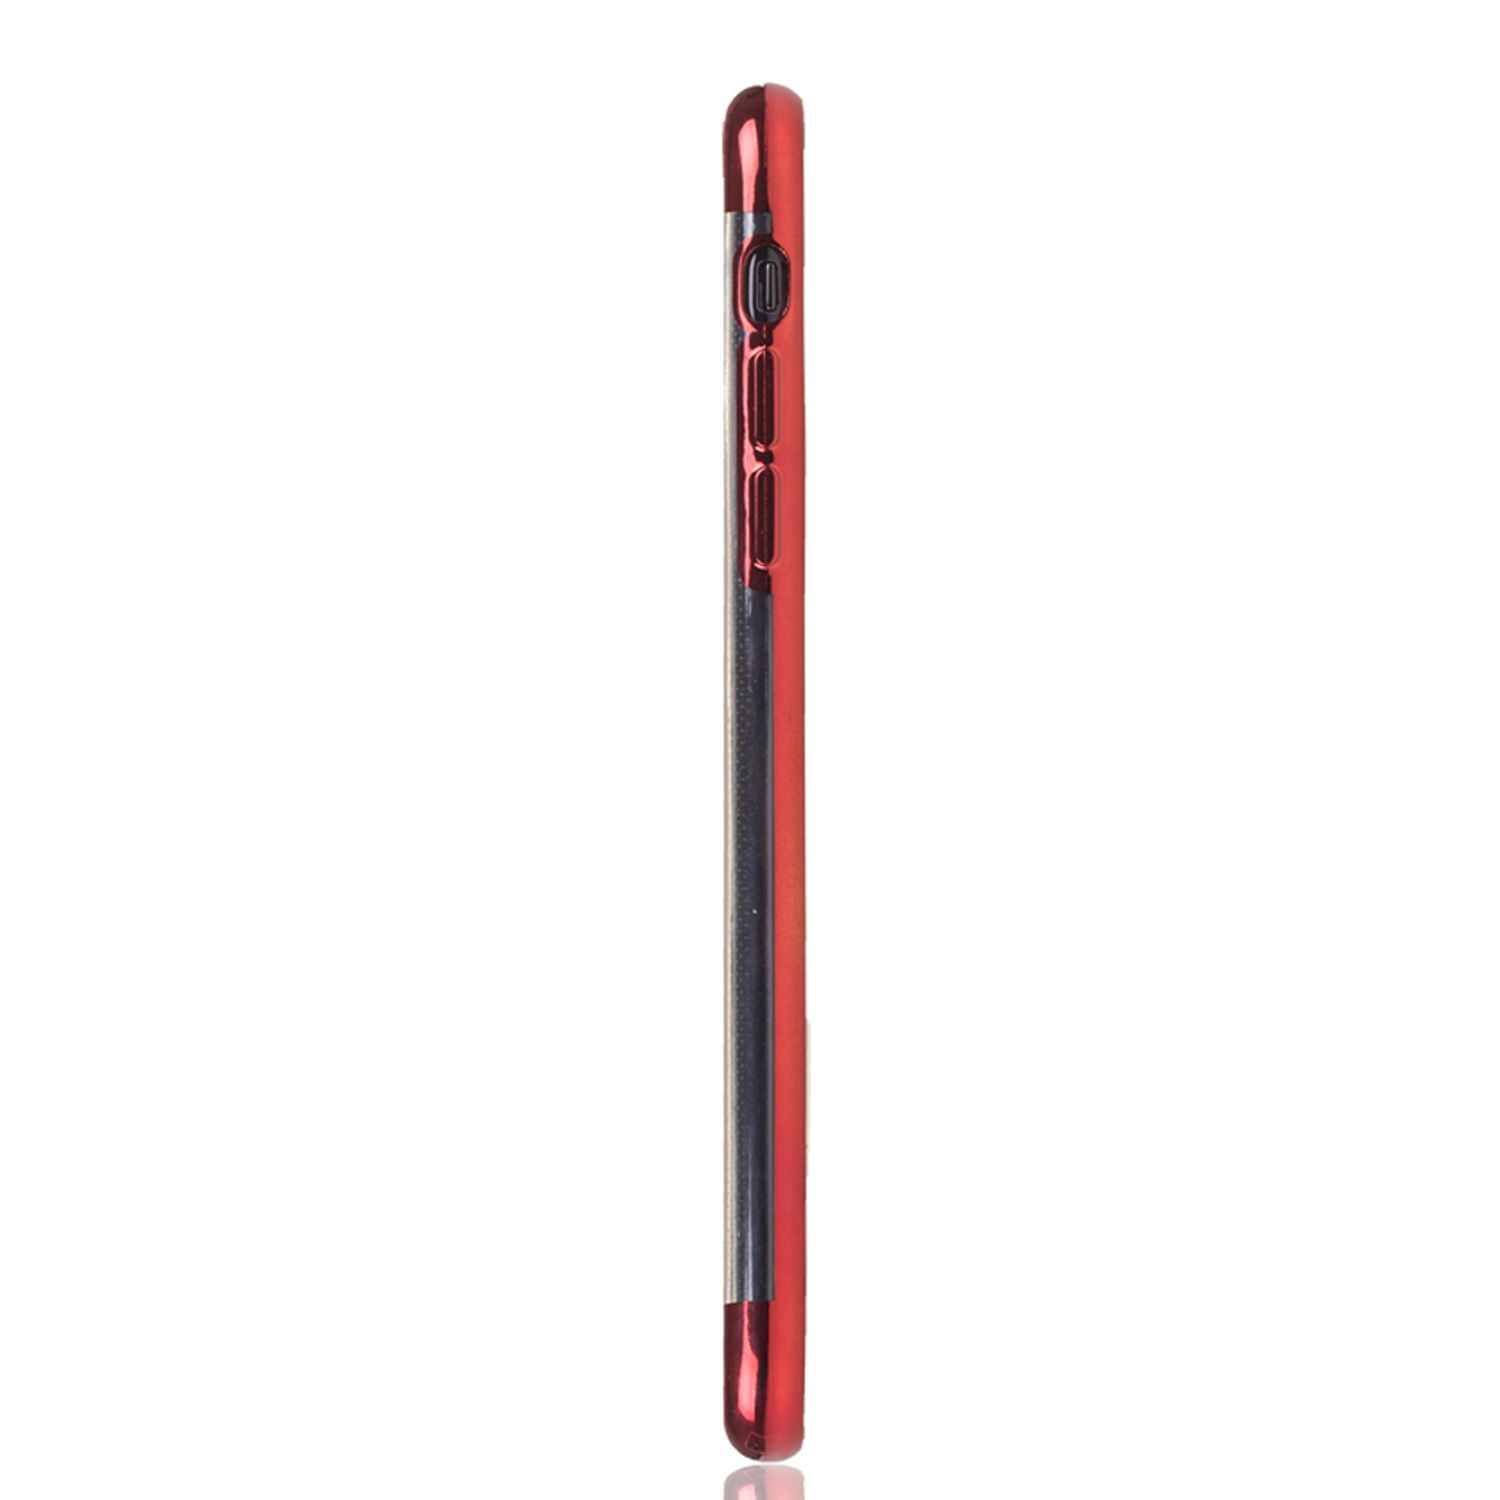 Apple, Max, KÖNIG iPhone DESIGN Pro Schutzhülle, 11 Rot Backcover,